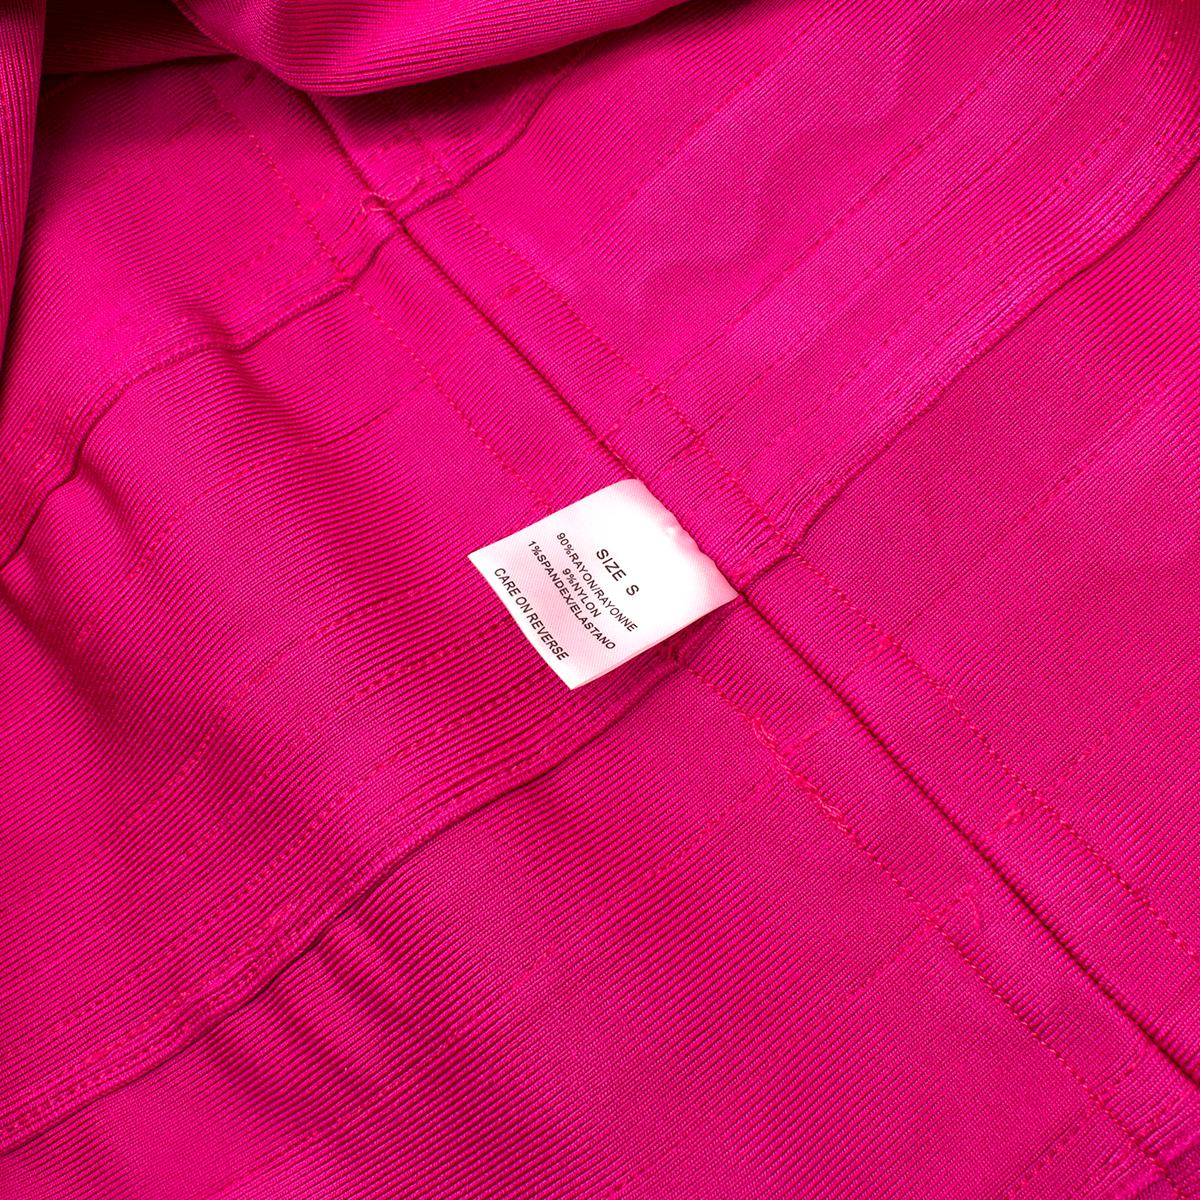 Herve Leger Nikayla Scalloped Edge Caprice Pink Dress  - Us size 6 For Sale 4